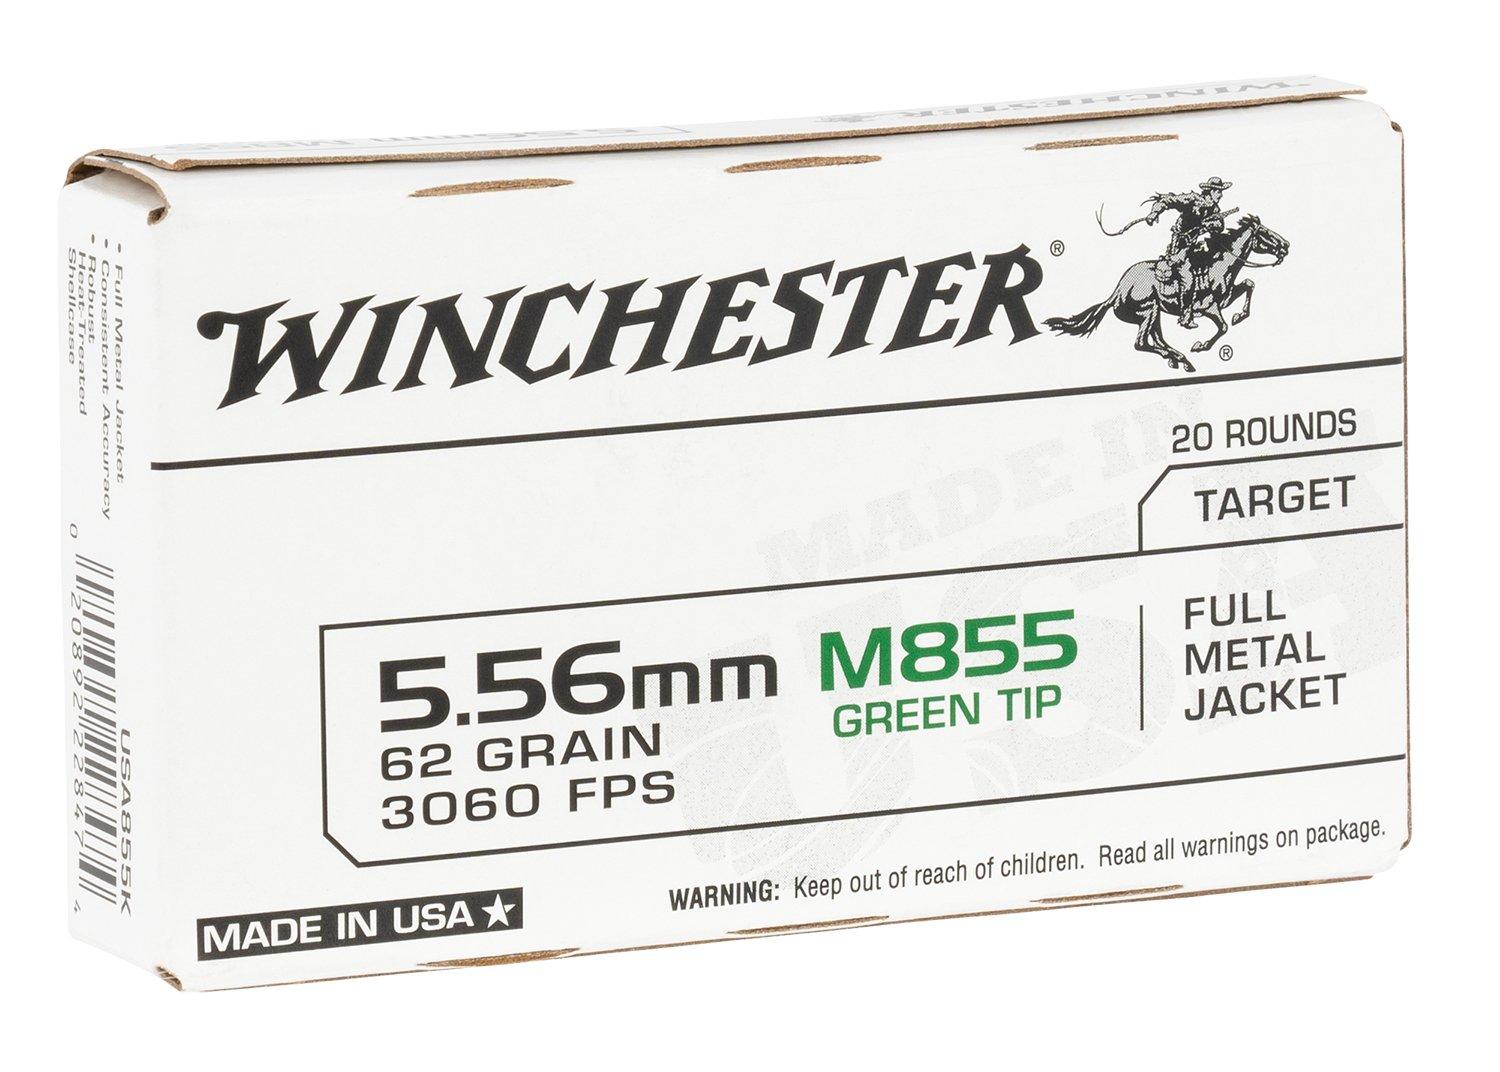 Winchester Usa Wm855k